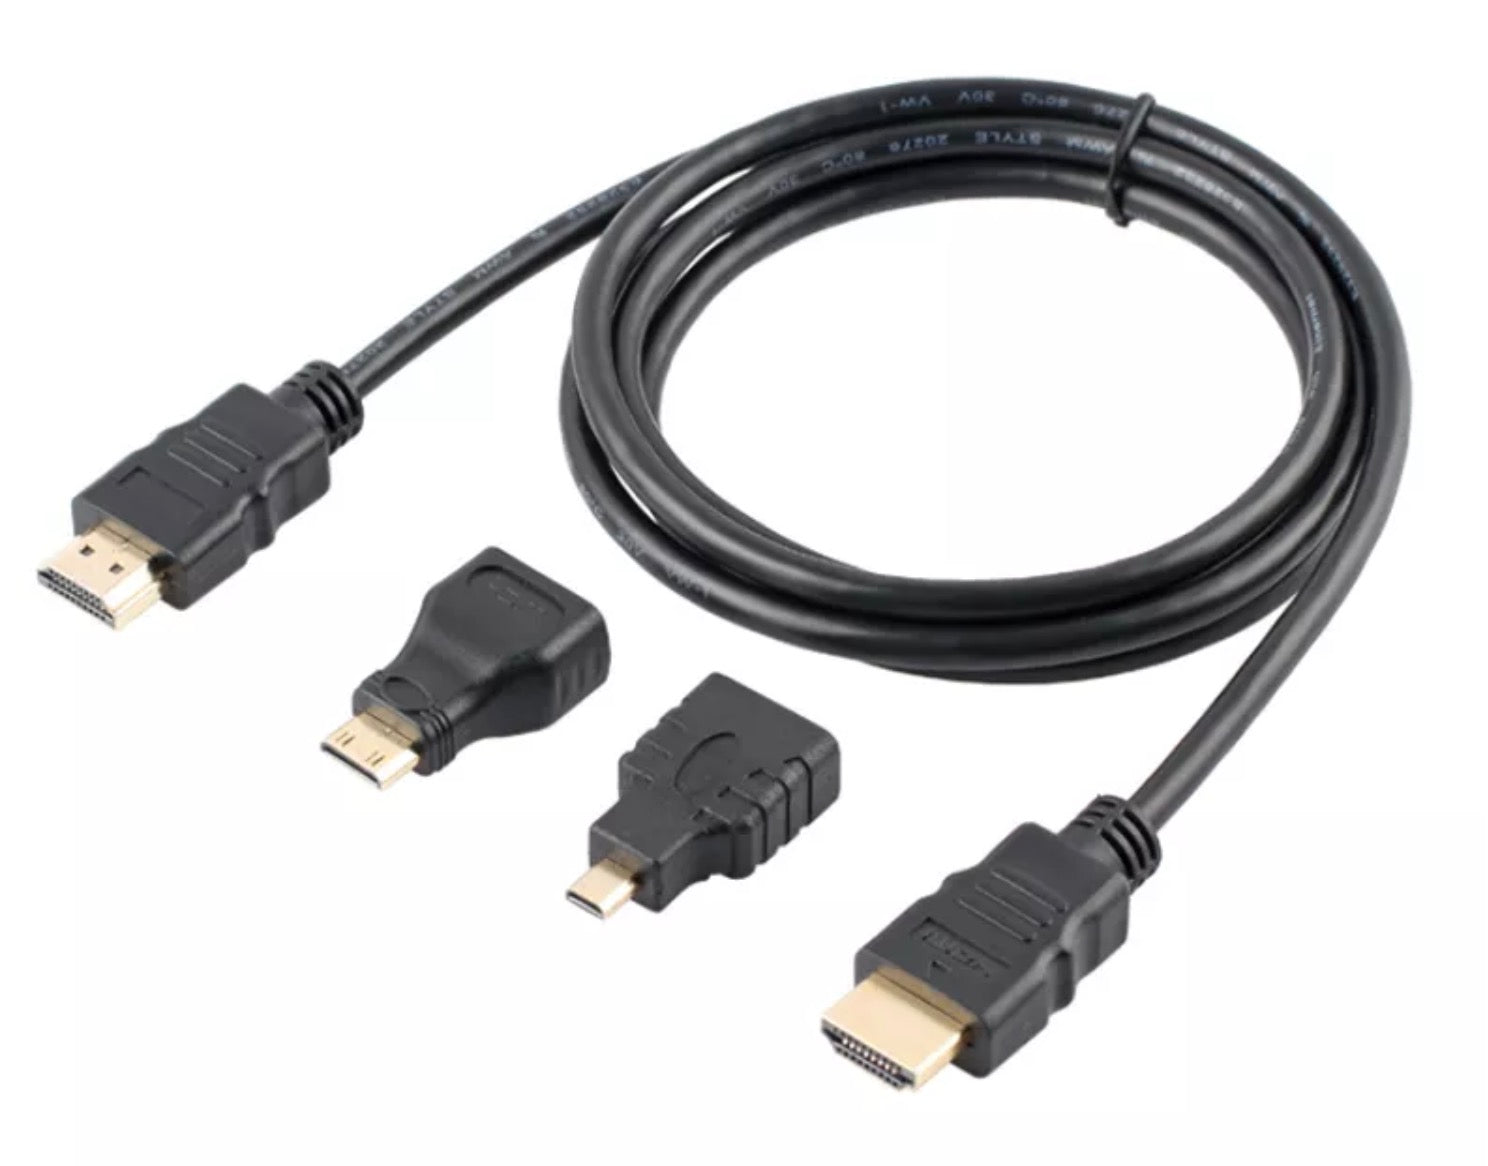 3 in 1 HDMI Cable Kit Including HDMI Mini + HDMI Micro Adapters